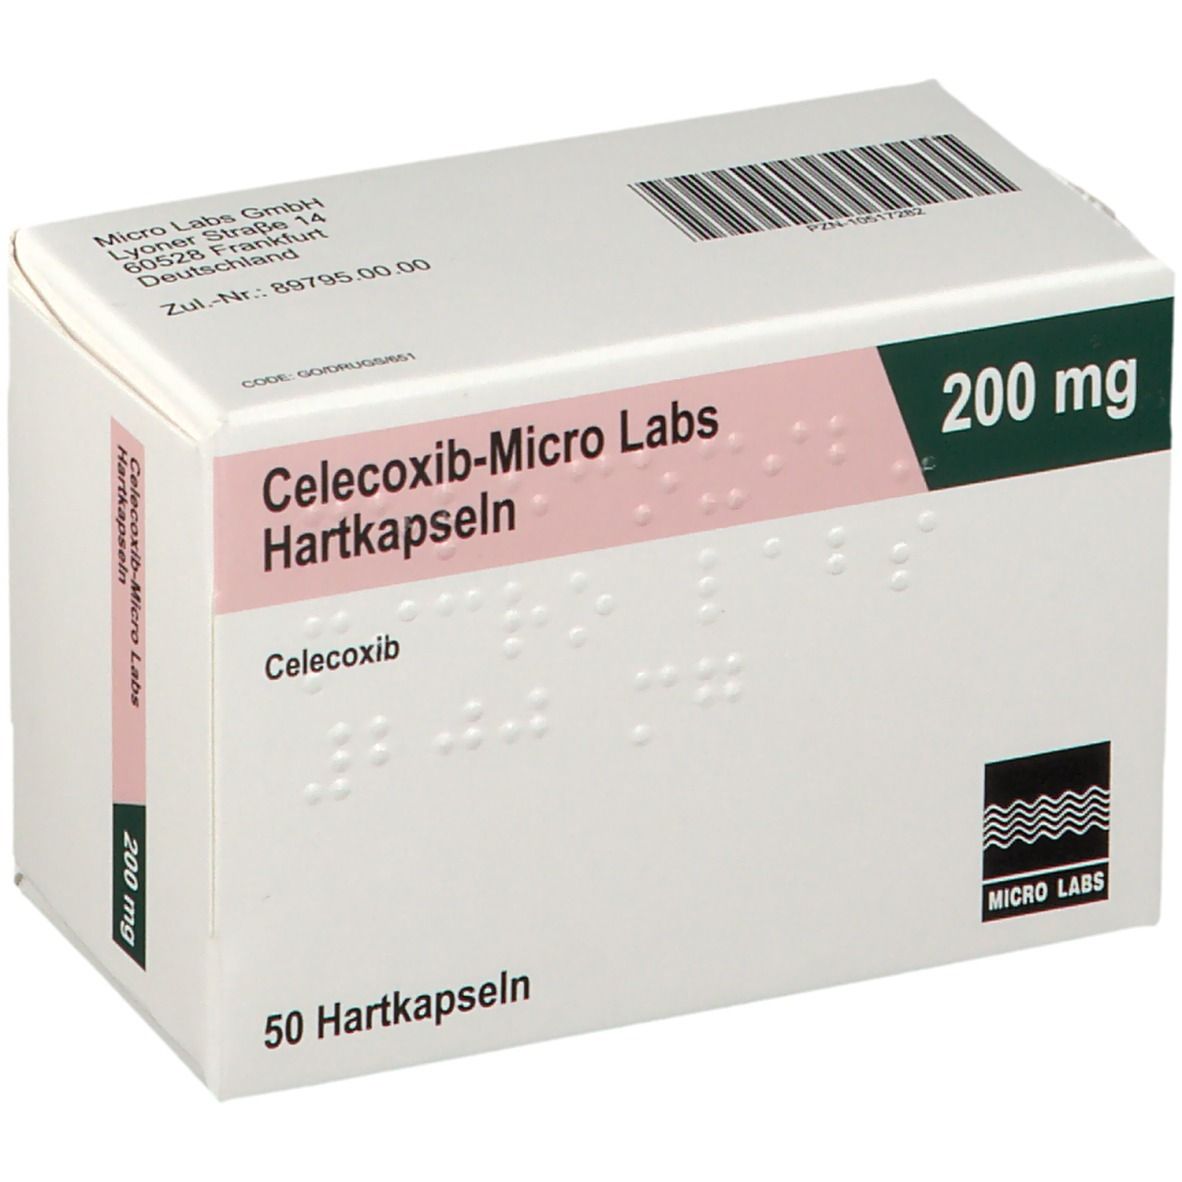 Celecoxib micro labs 200 mg